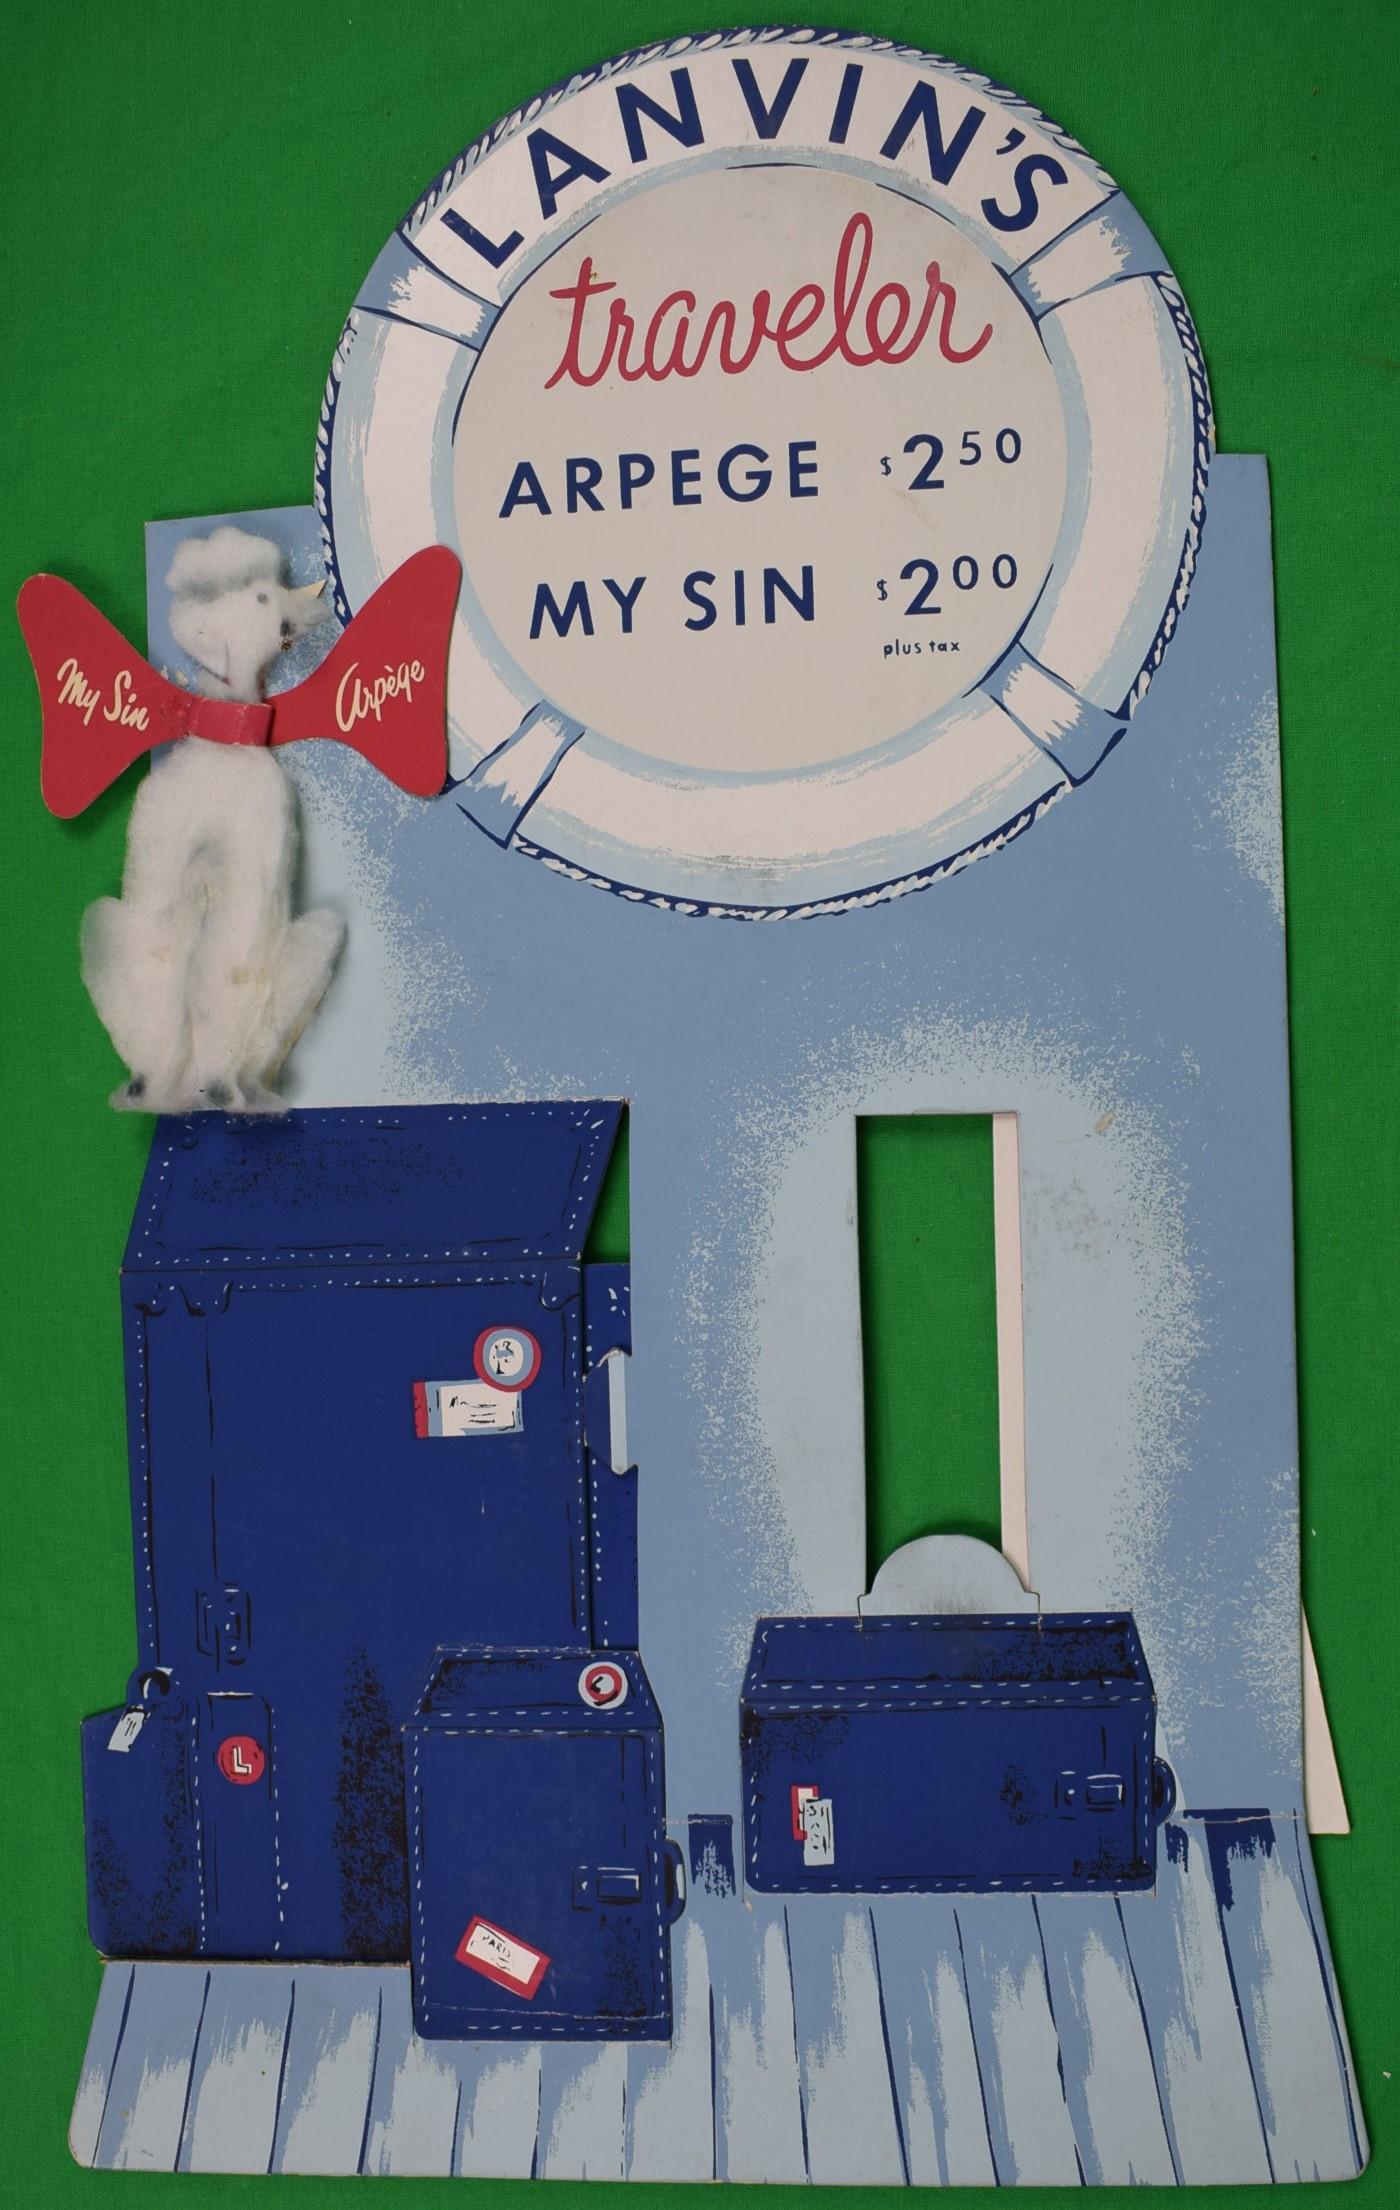 'Lanvin's Paris Traveler Arpege/ My Sin c1950s Advert Sign w/ White Poodle" - Art by Alexander Warren Montel